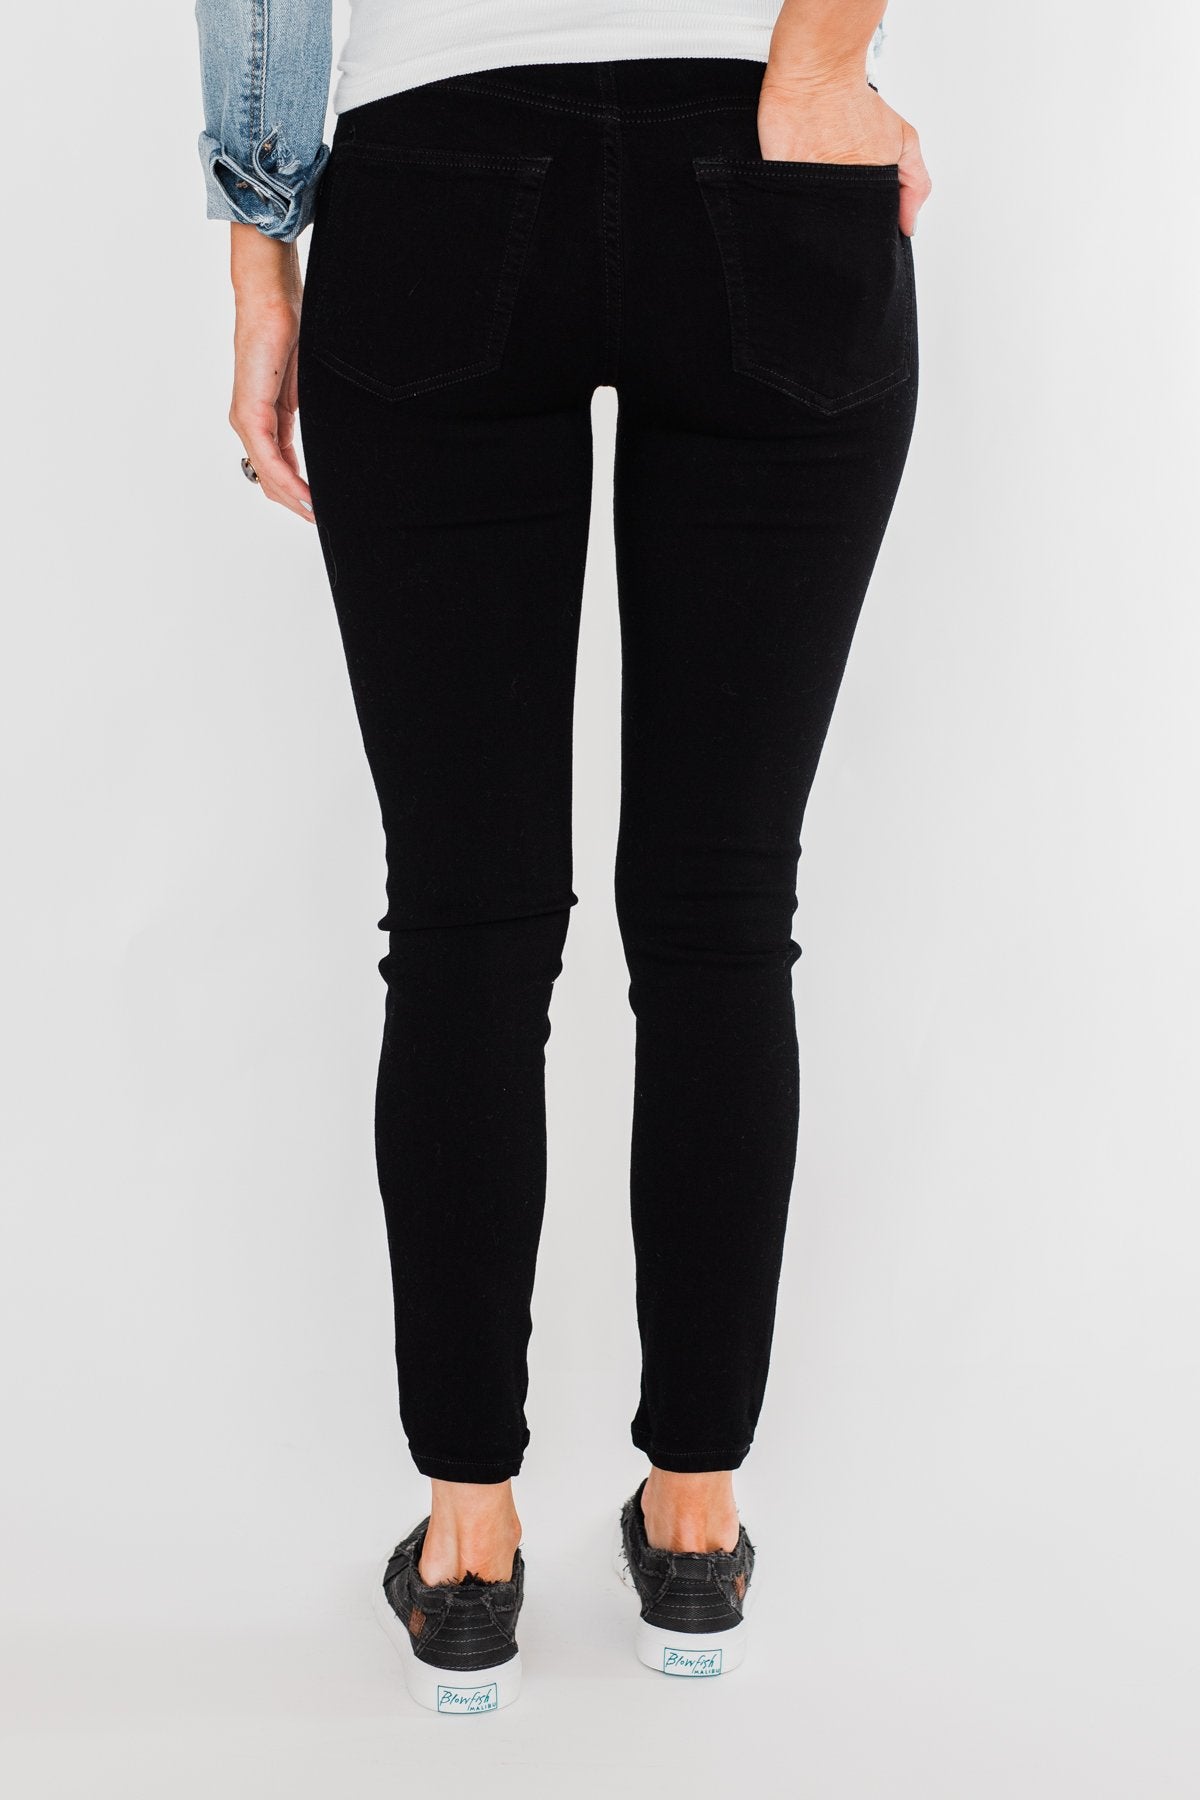 Sneak Peek Non-Distressed Jeans- Black – The Pulse Boutique